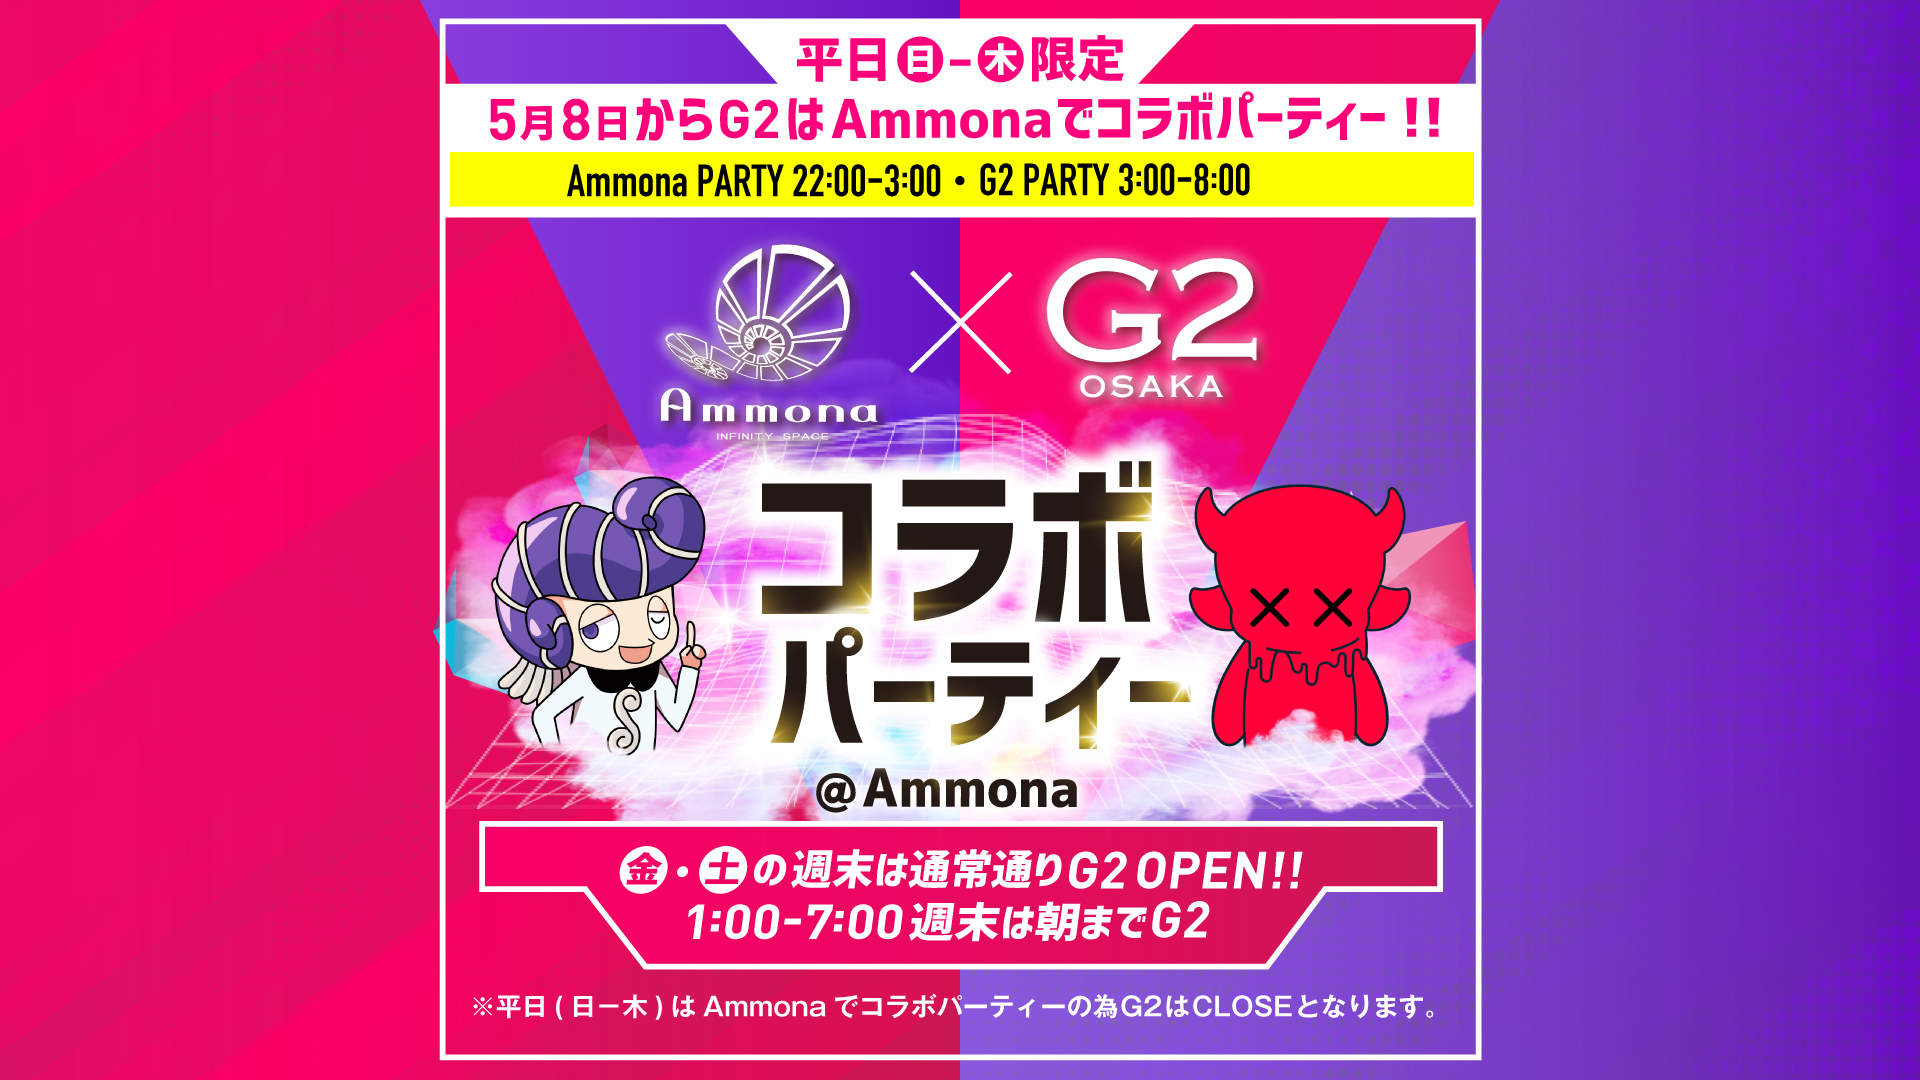 G2 × Ammonaコラボパーティー@Ammona